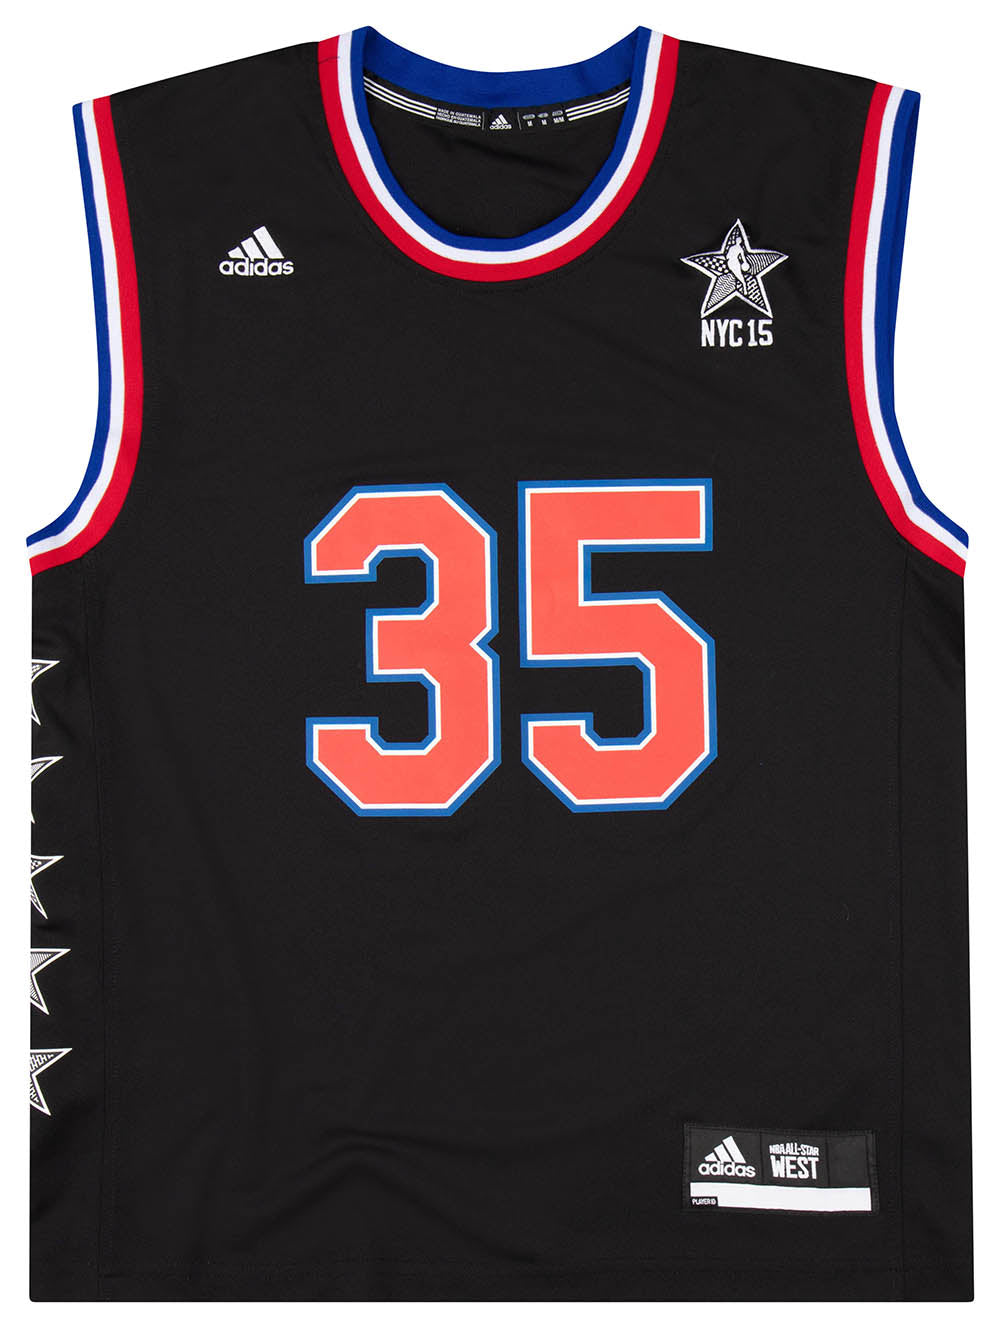 2015 NBA ALL-STAR DURANT #35 ADIDAS JERSEY M